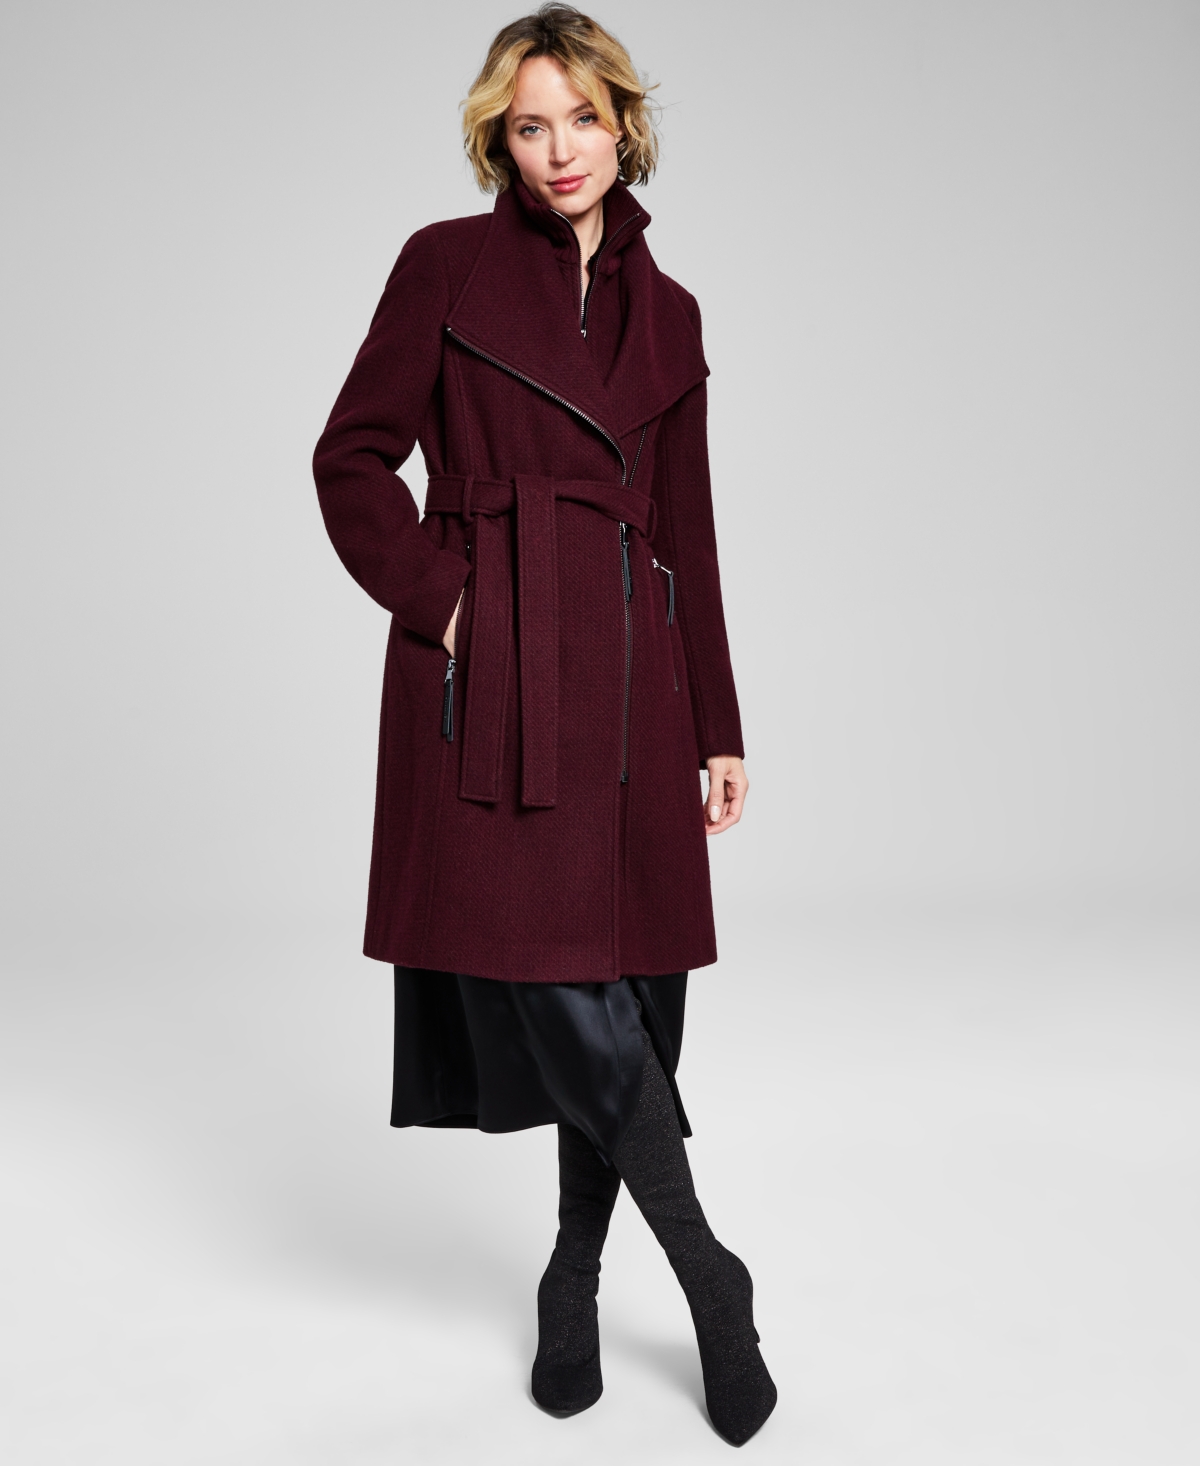 Calvin Klein Women's Belted Wrap Coat $159.99